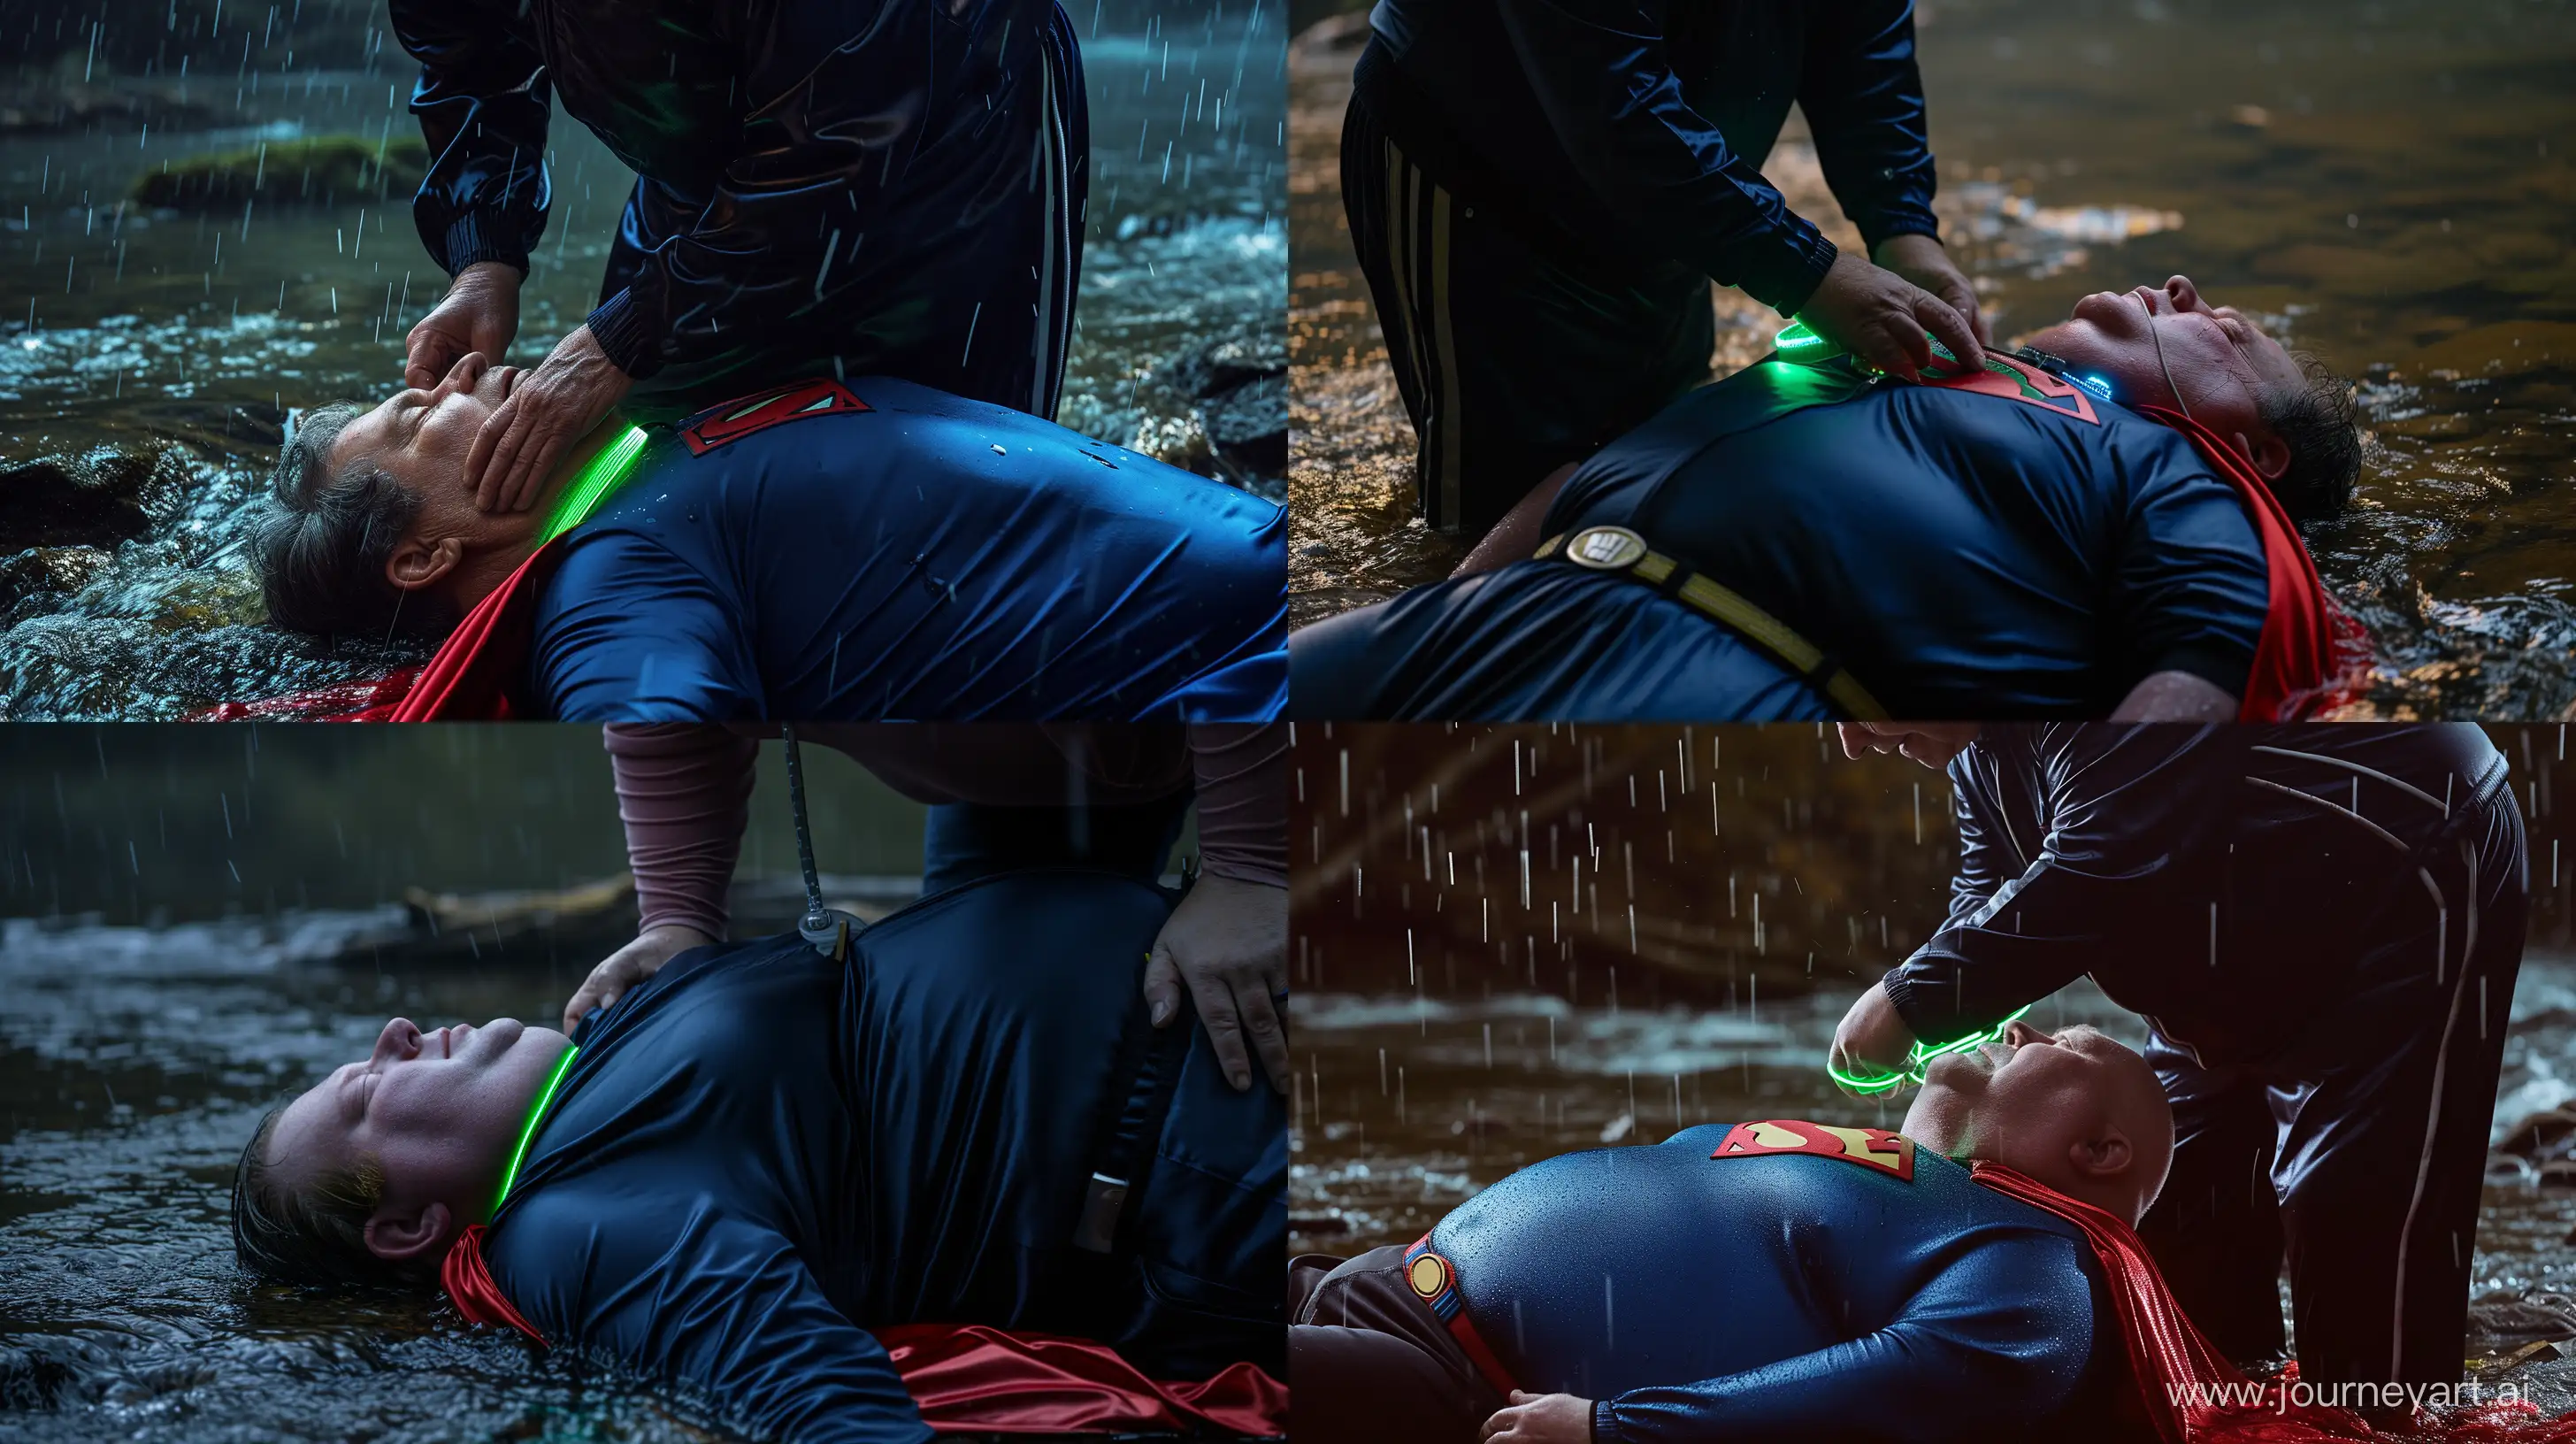 Elderly-Superman-Receives-Unique-Neon-Dog-Collar-Under-Rain-by-the-River